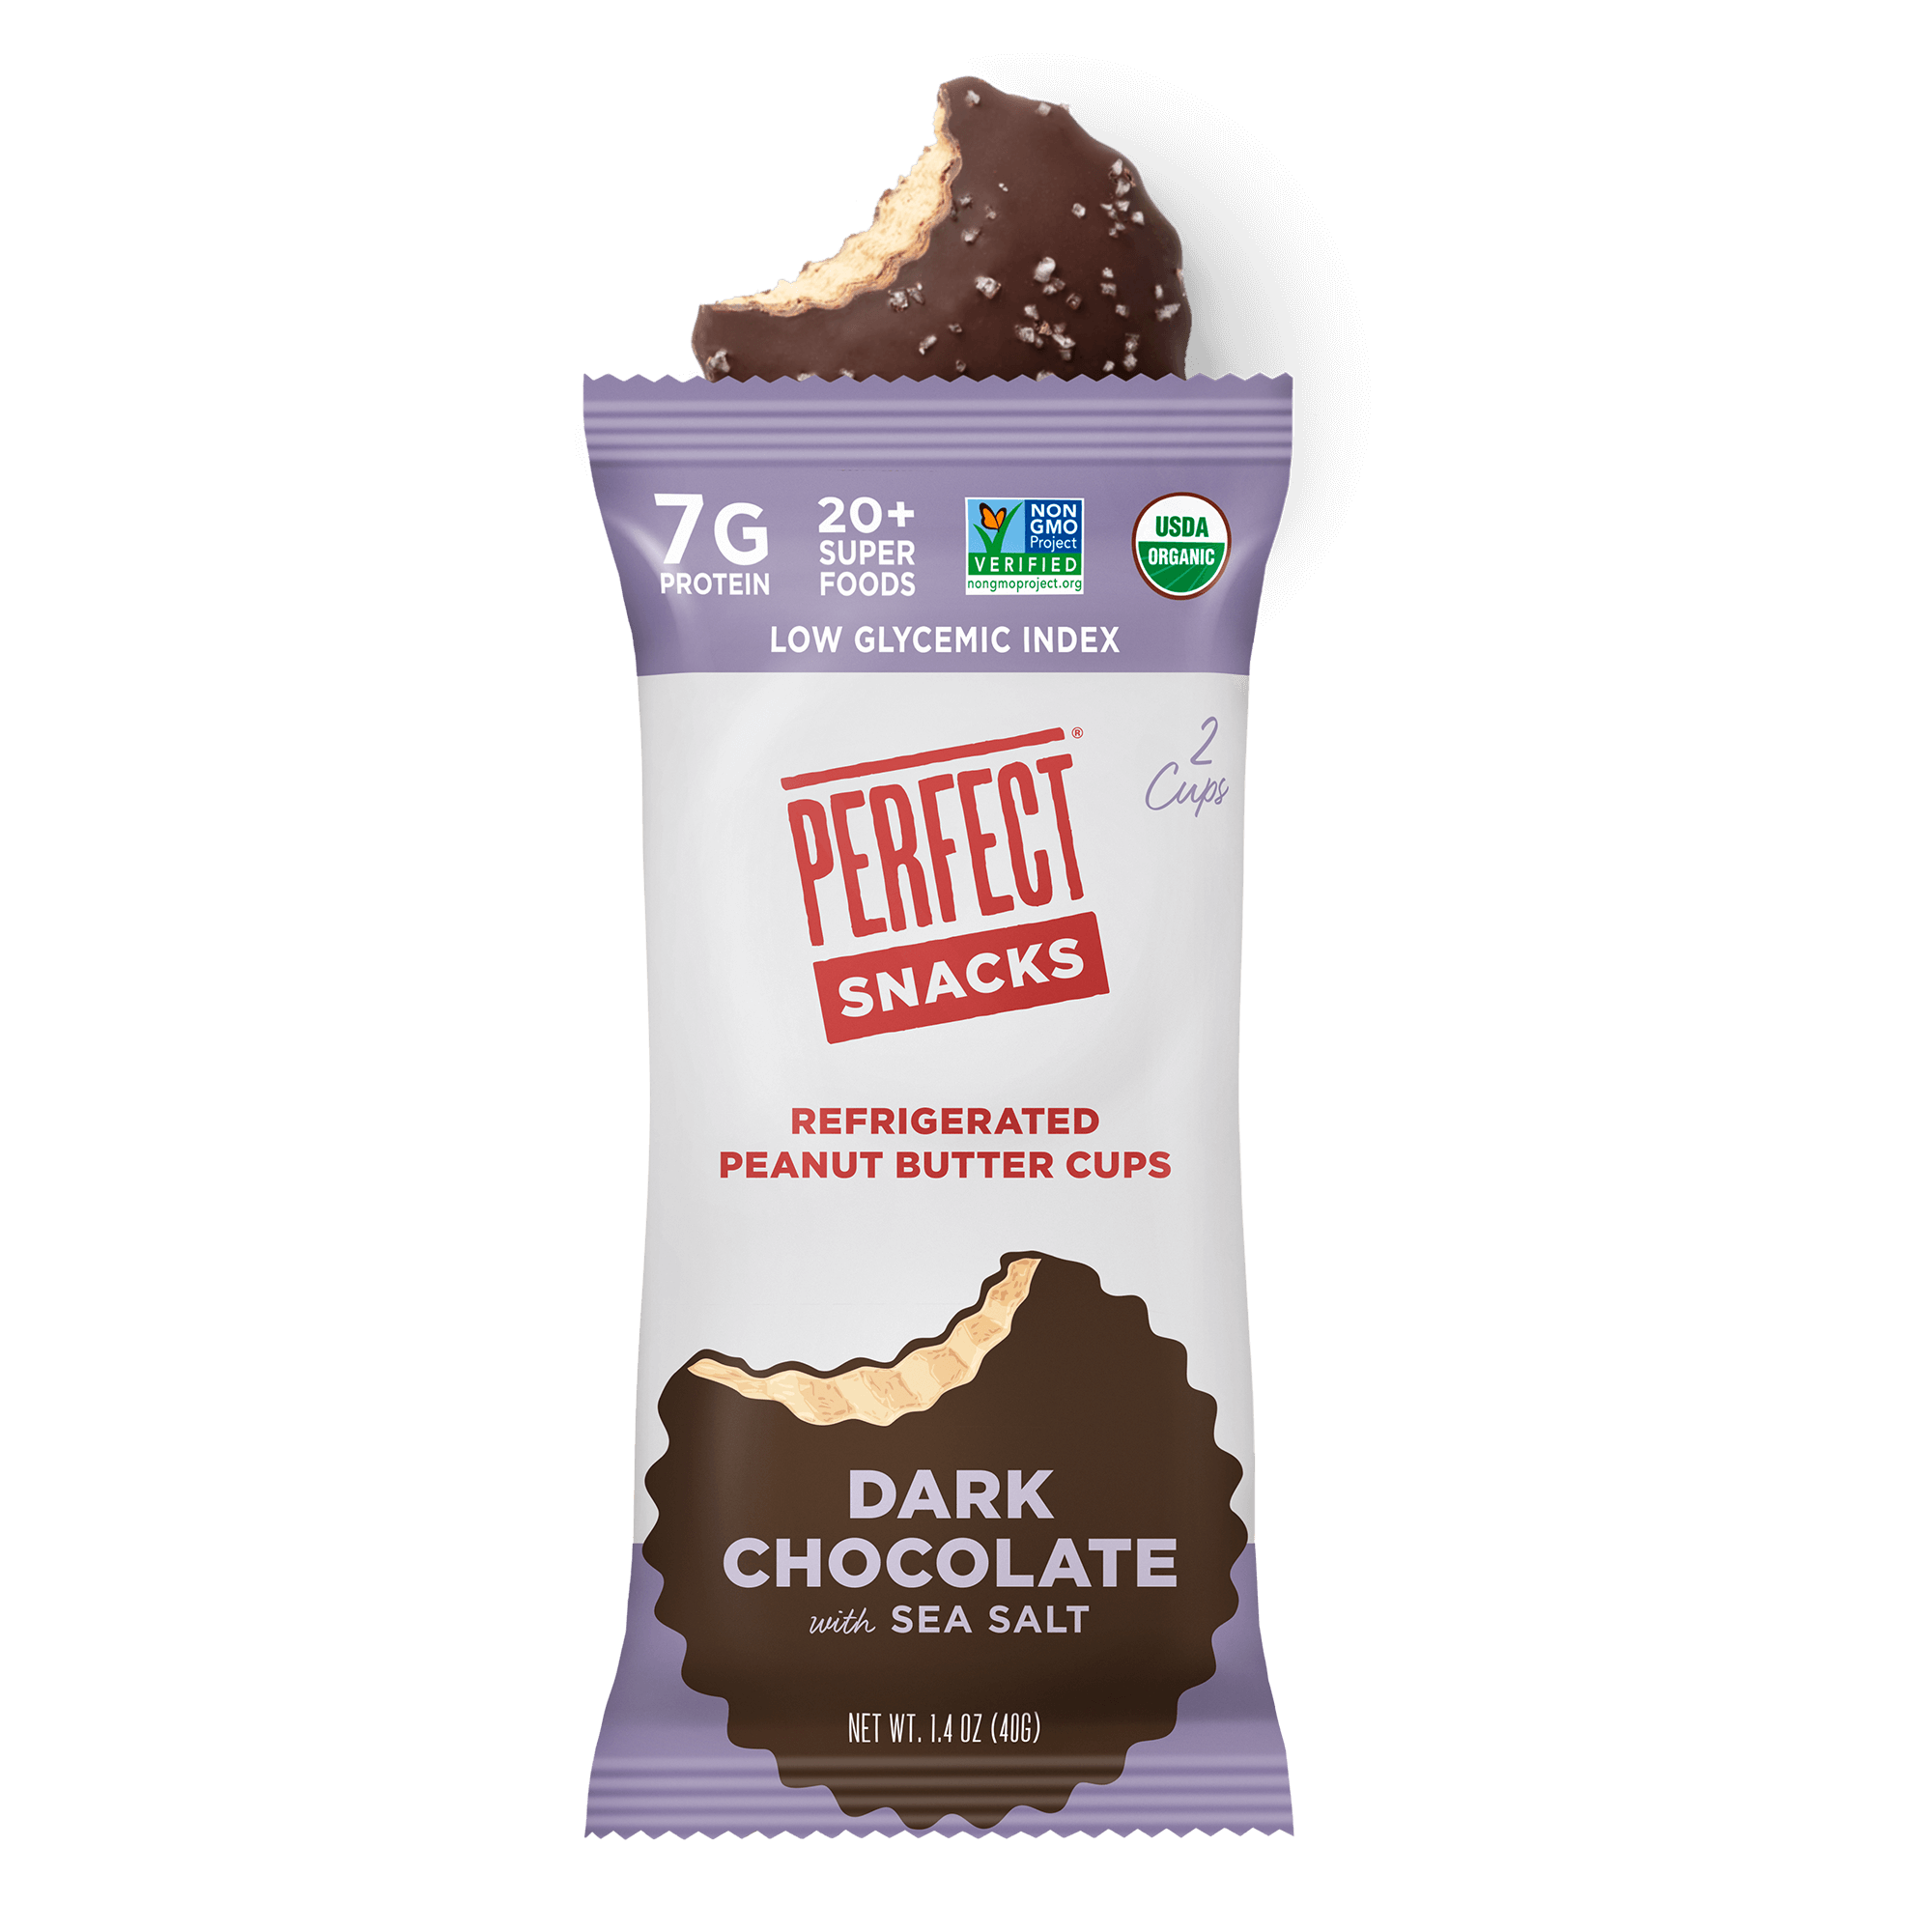 Dark Chocolate with Sea Salt Refrigerated Peanut Butter Cups